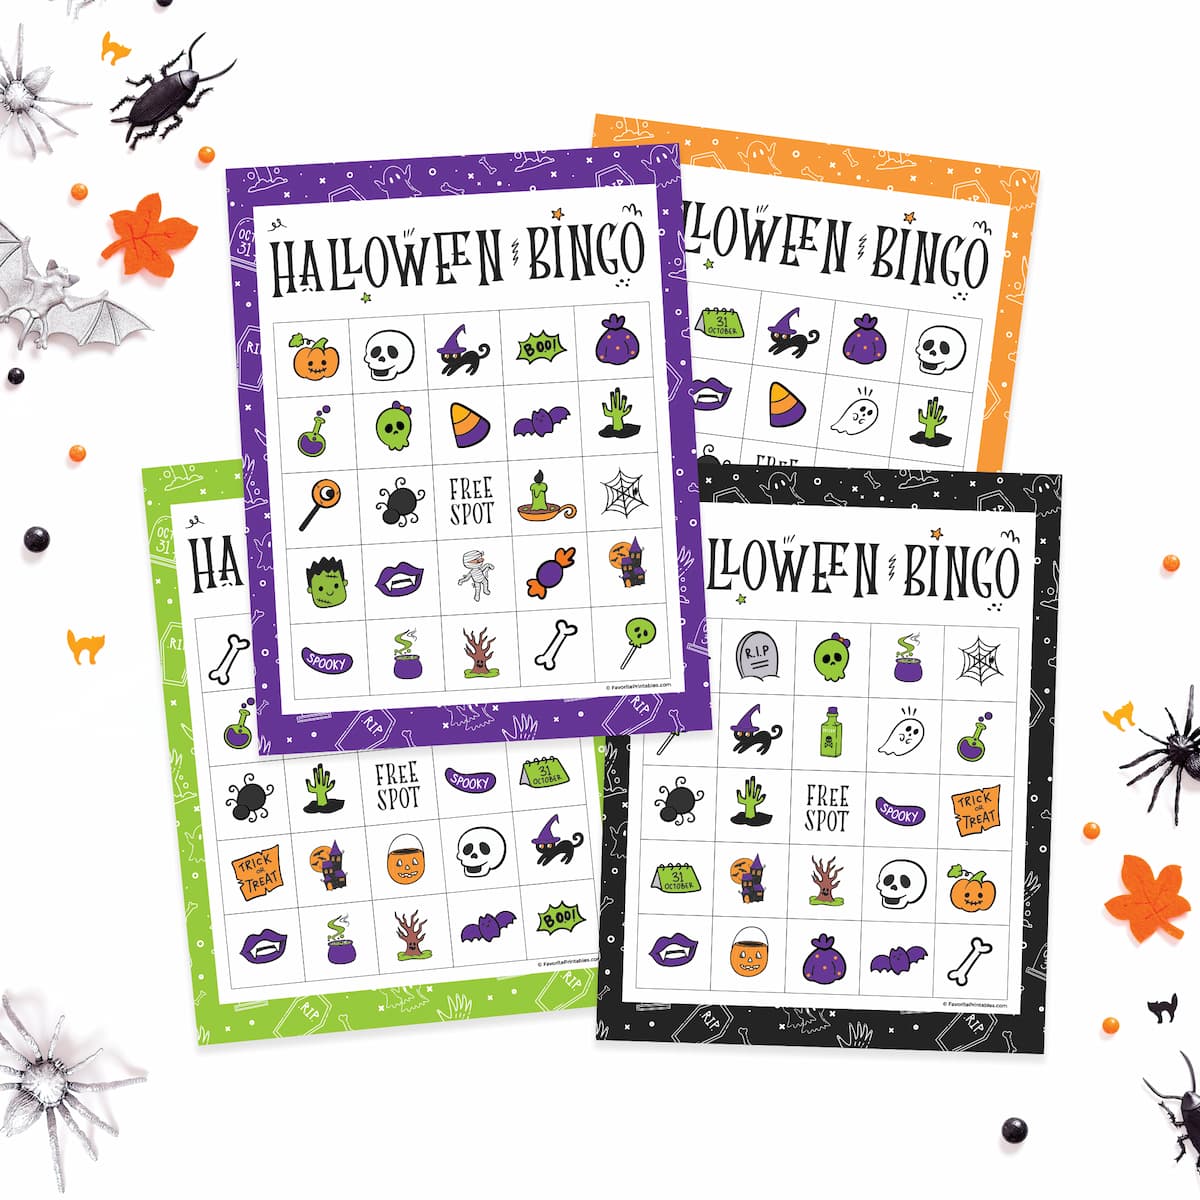 Free printable Halloween Bingo Game set.